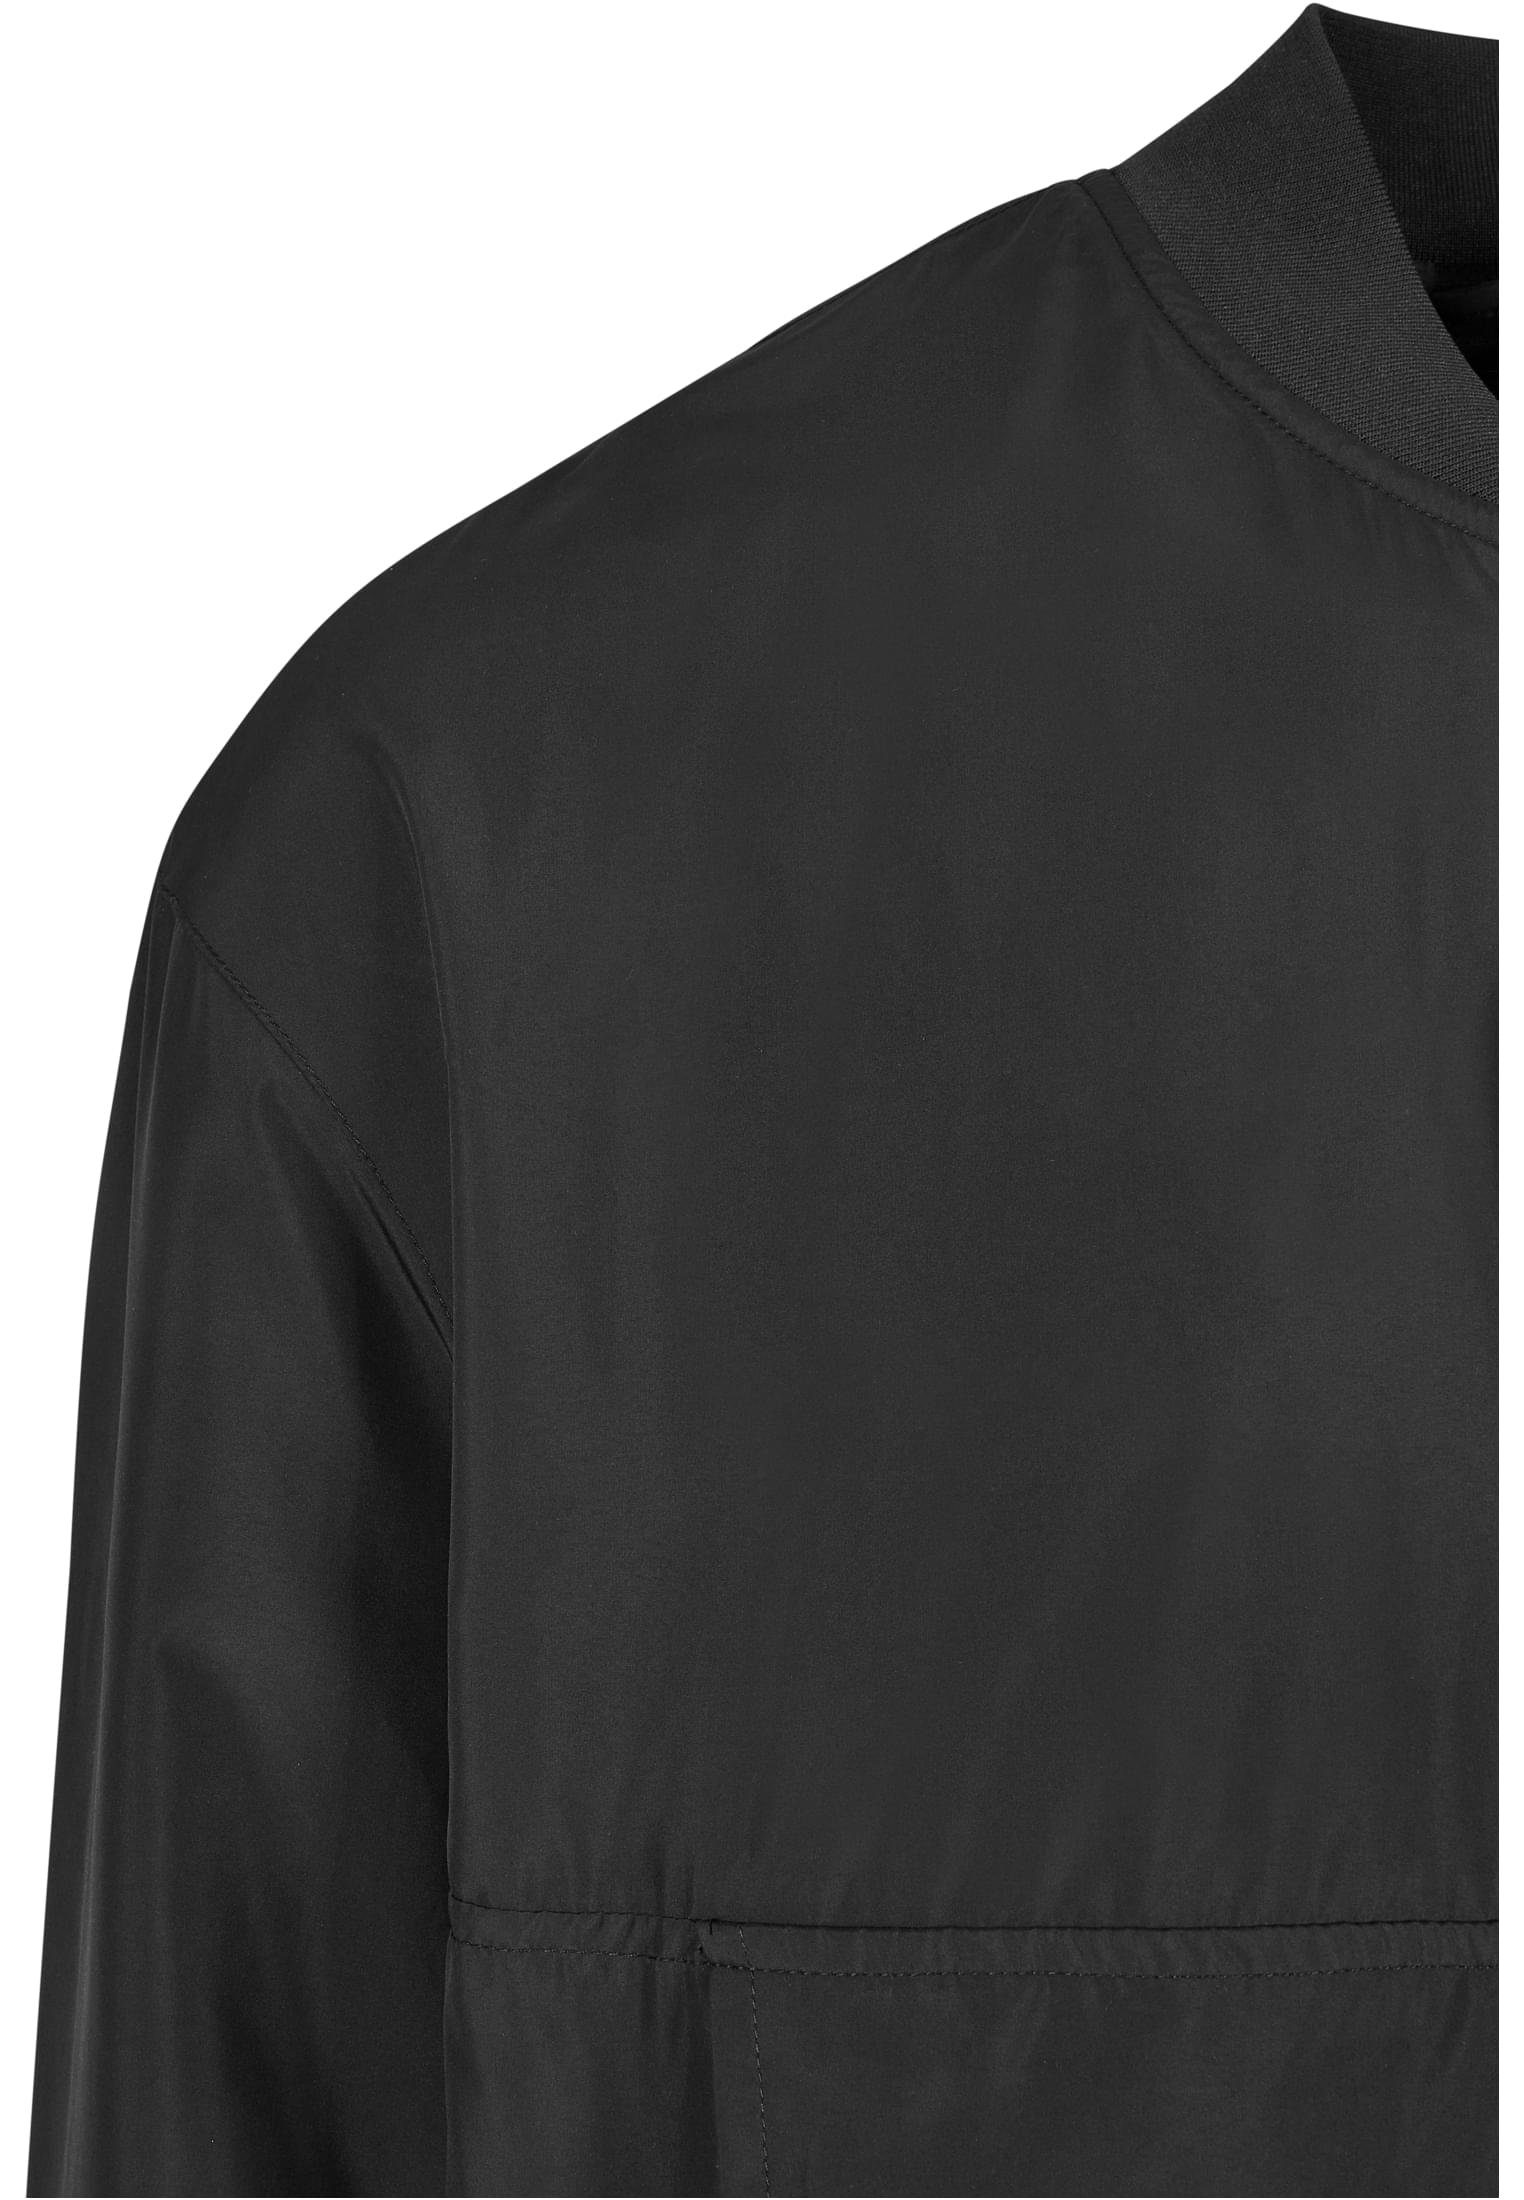 URBAN CLASSICS Outdoorjacke Herren (1-St) Bomber black Jacket Pullover